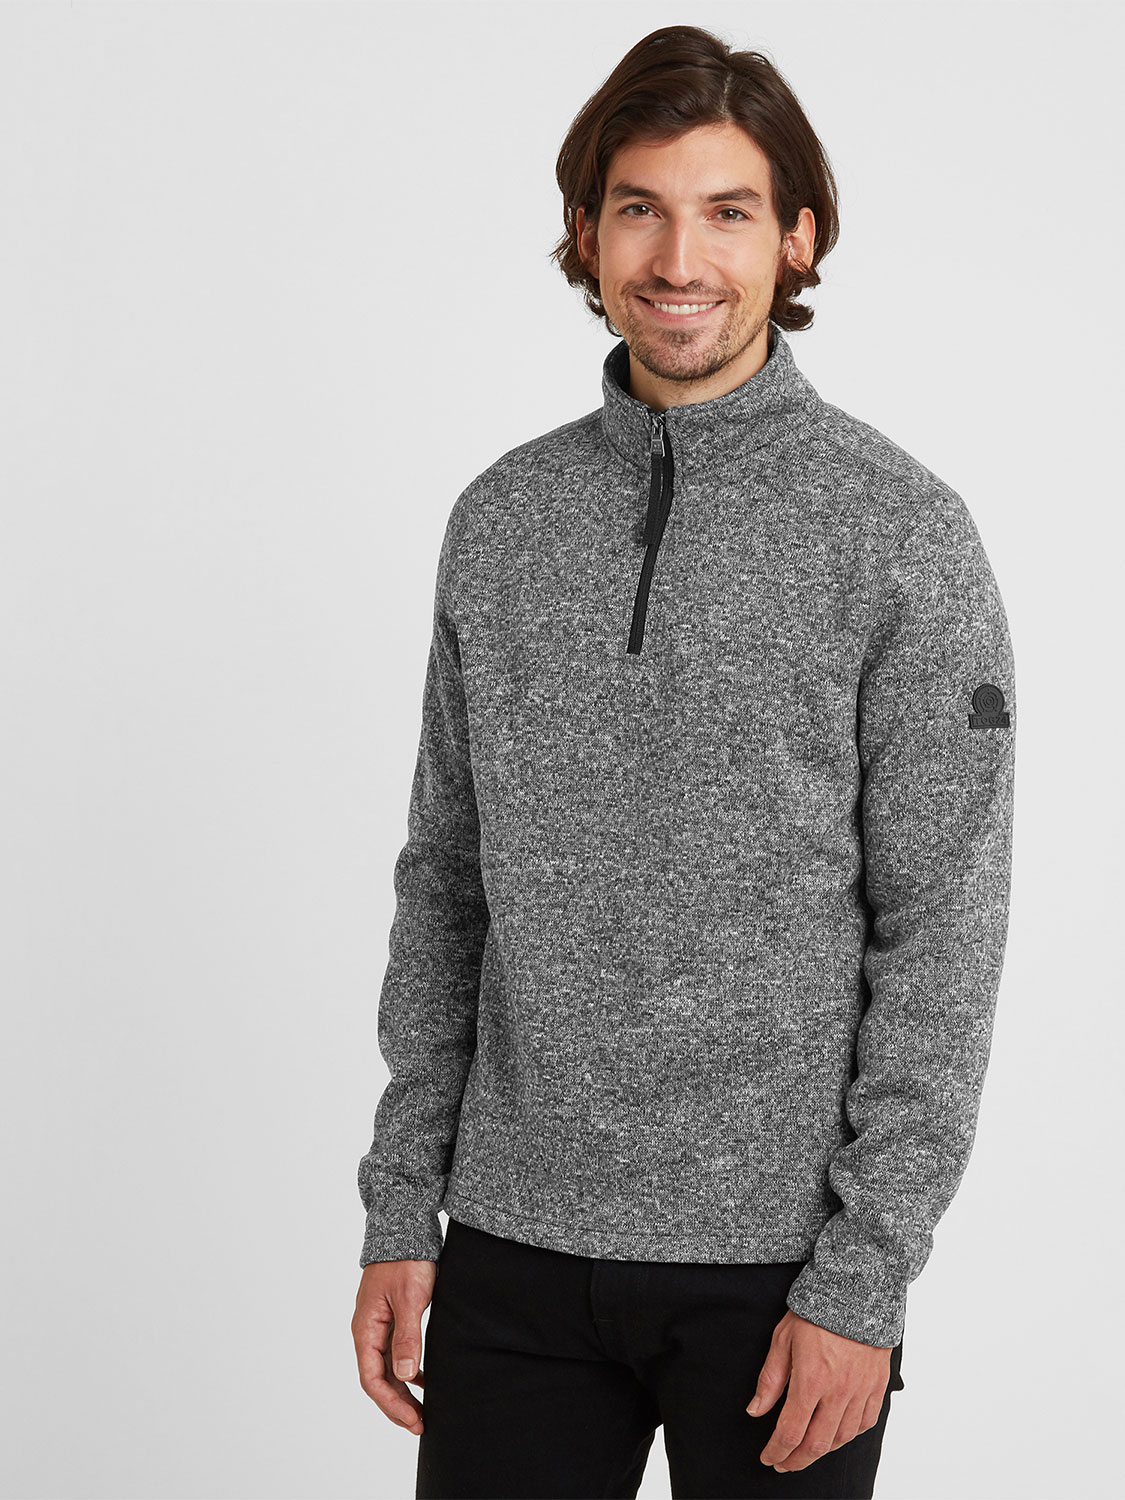 Pearson Knitlook Fleece Zipneck - Size: Small Men’s Grey Tog24